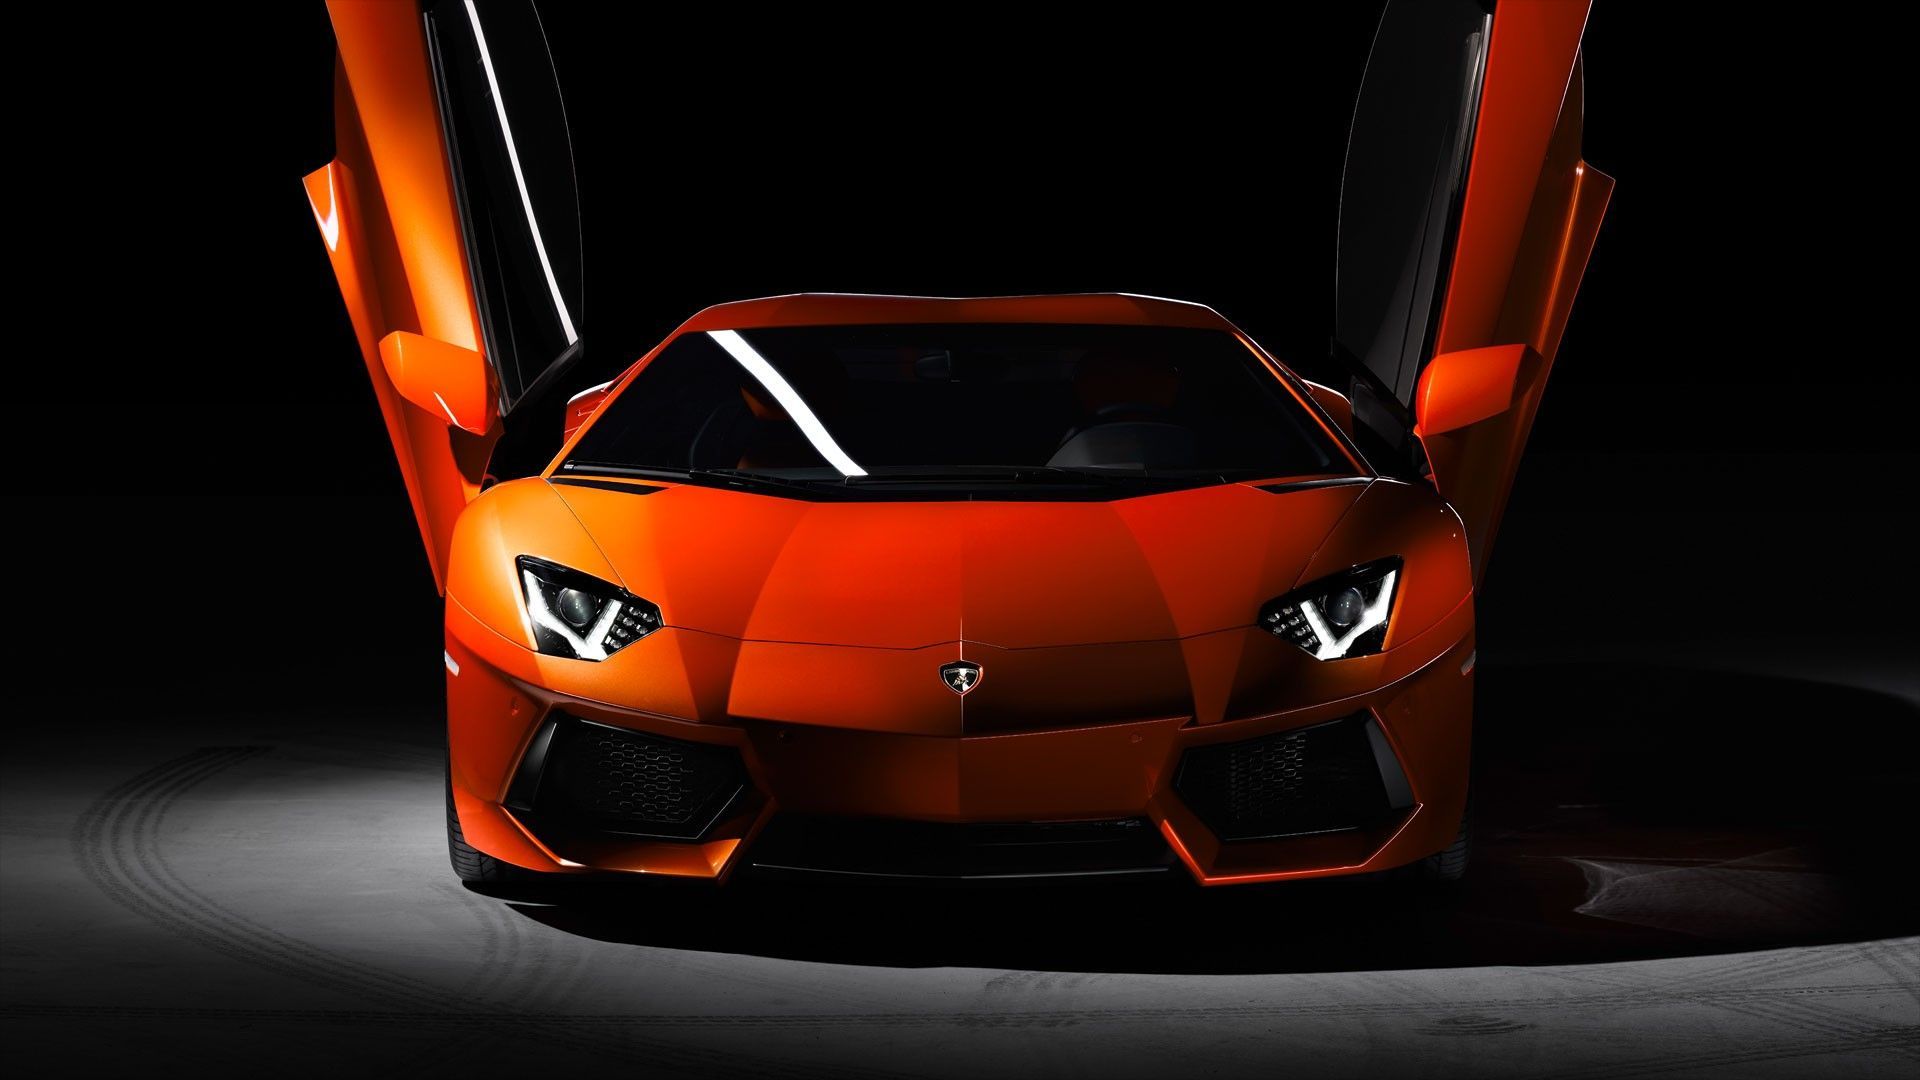 3D Lamborghini Wallpapers